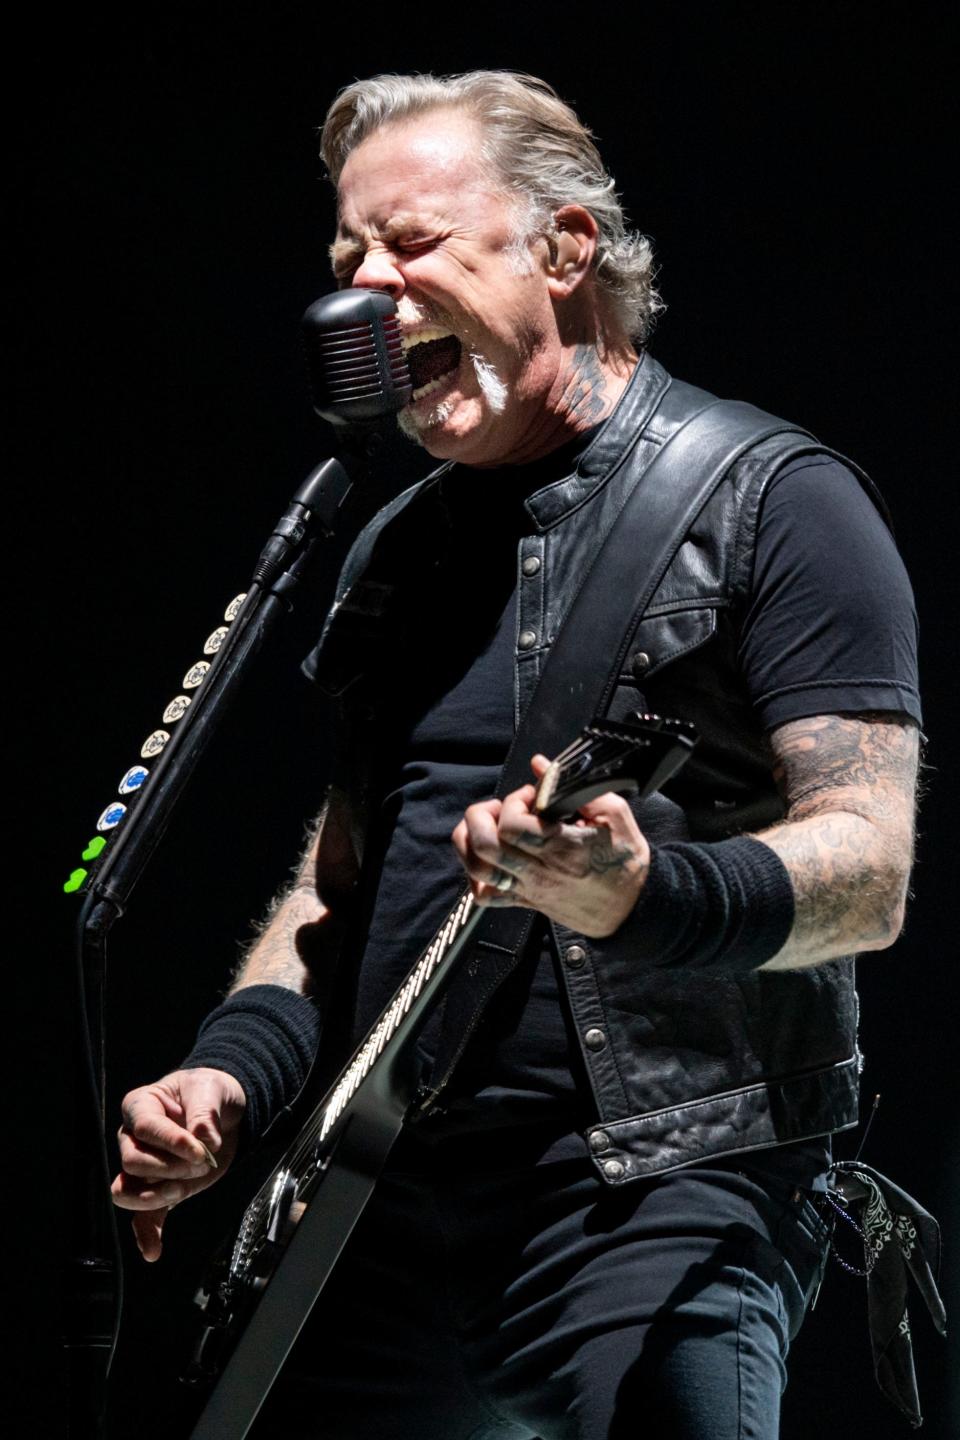 Metalica vocalist/guitarist James Hetfield performs during the WorldWired Tour at Bridgestone Arena in Nashville, Tenn., Thursday, Jan. 24, 2019.